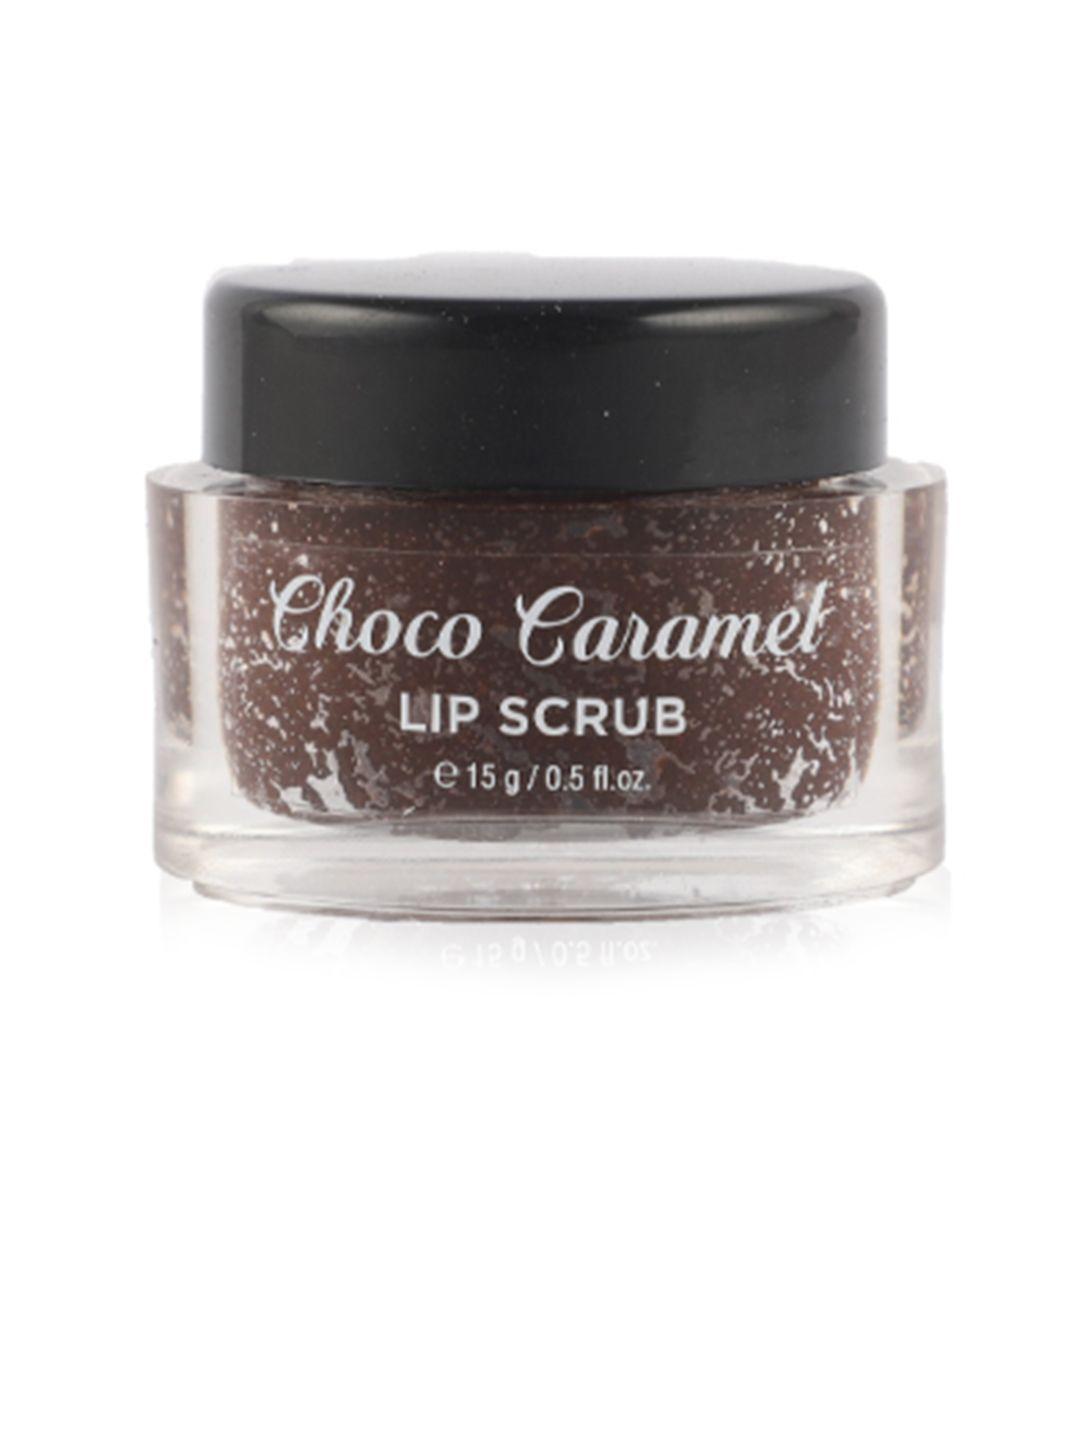 anour-choco-caramel-lip-scrub-with-jojoba-oil-&-shea-butter-for-soft-&-smooth-lips---15g